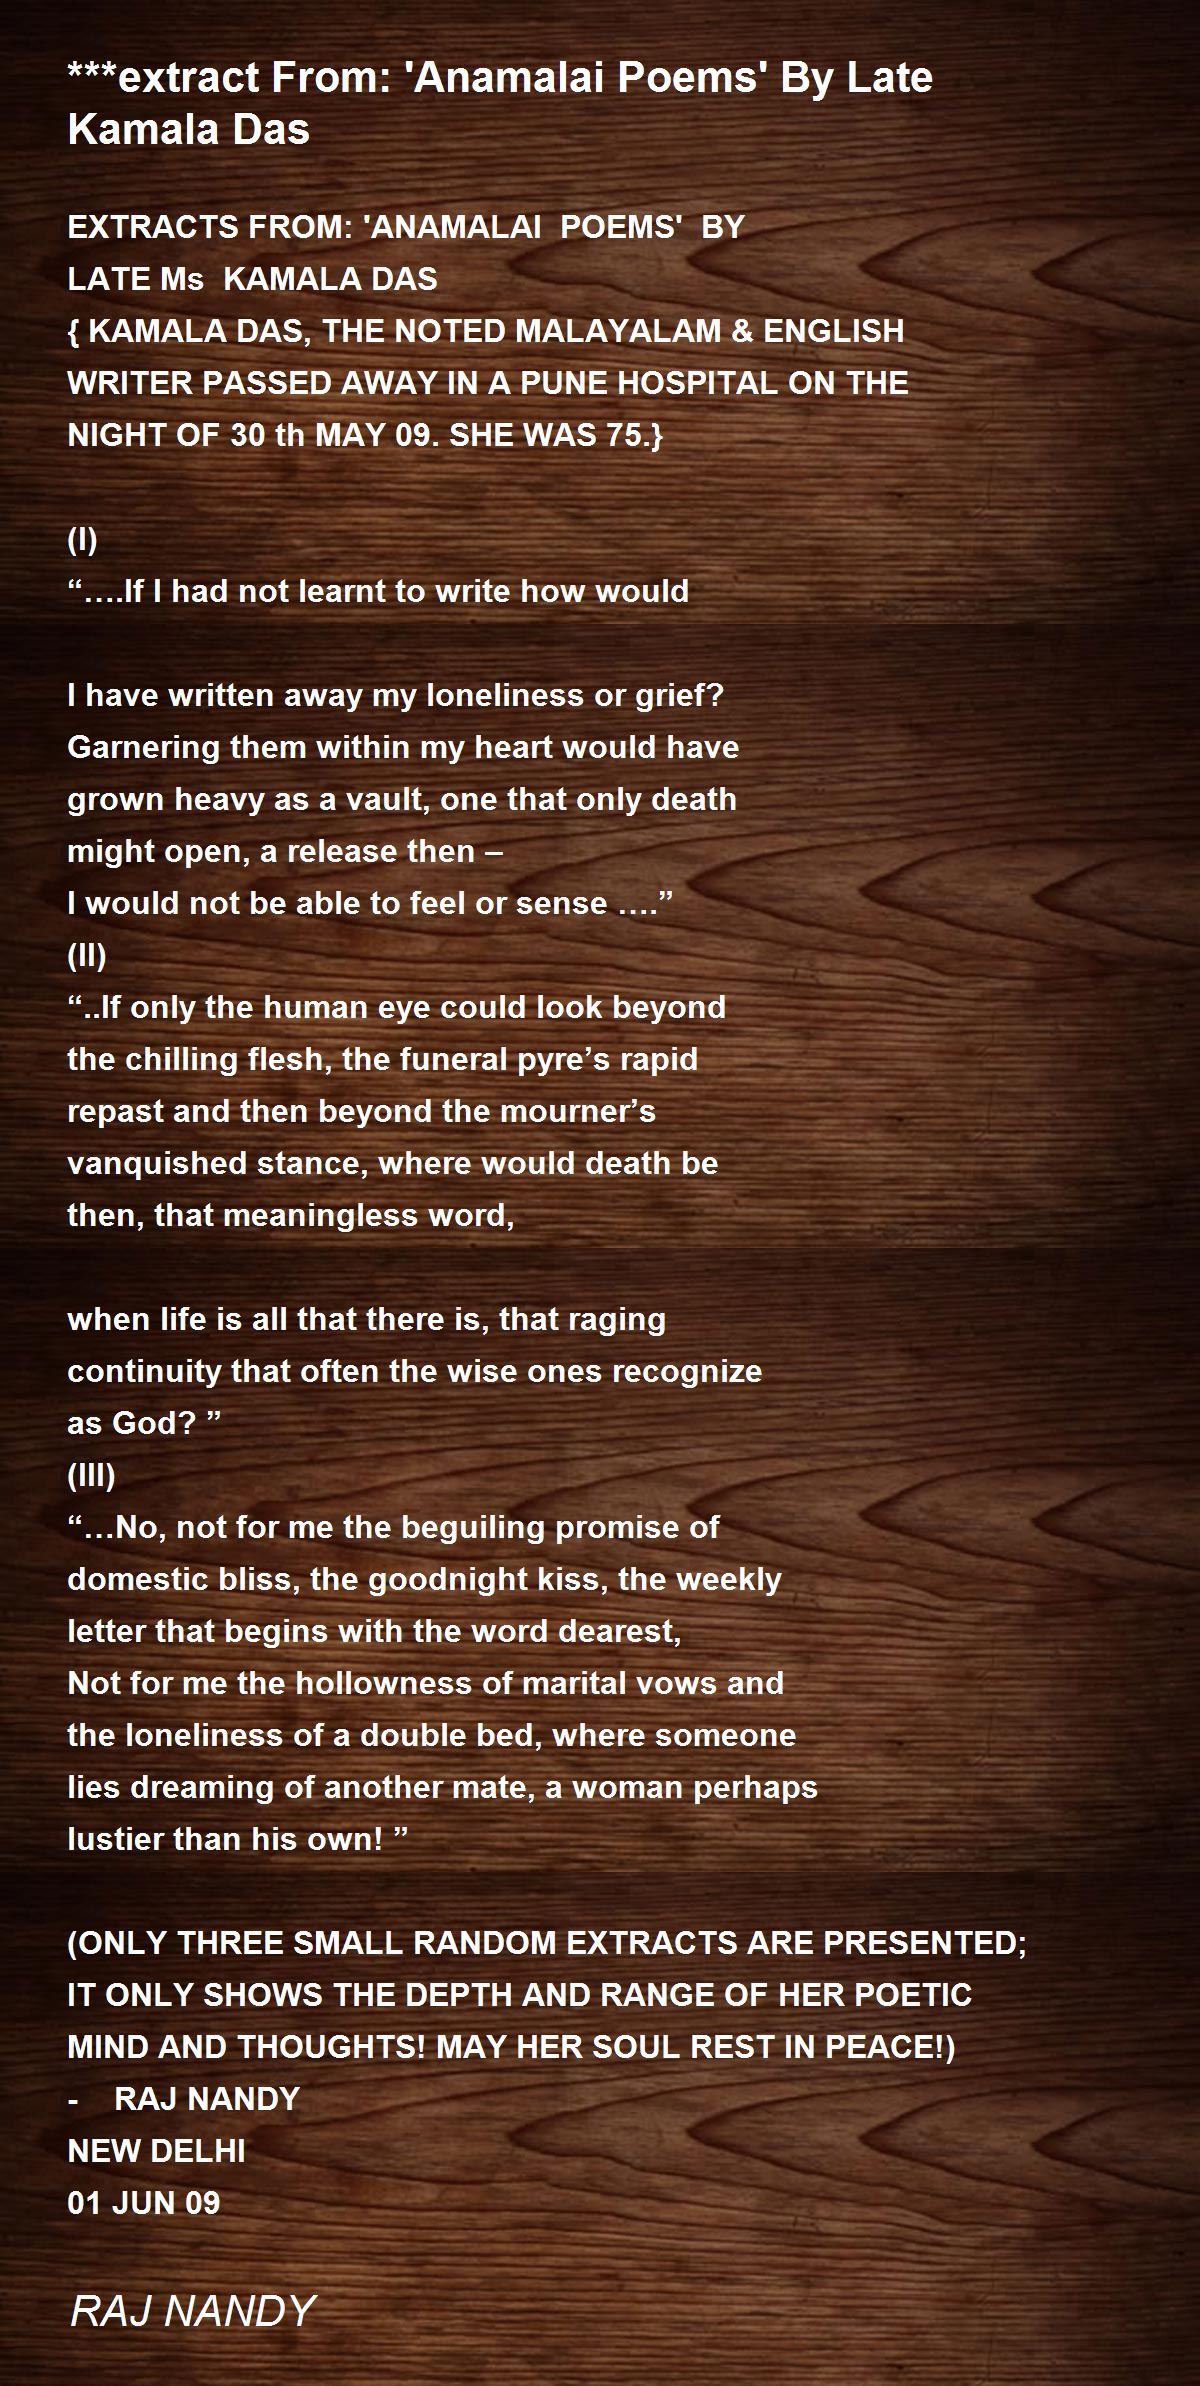 Kamala Das’s poem “An Introduction”-a review/analysis/summary